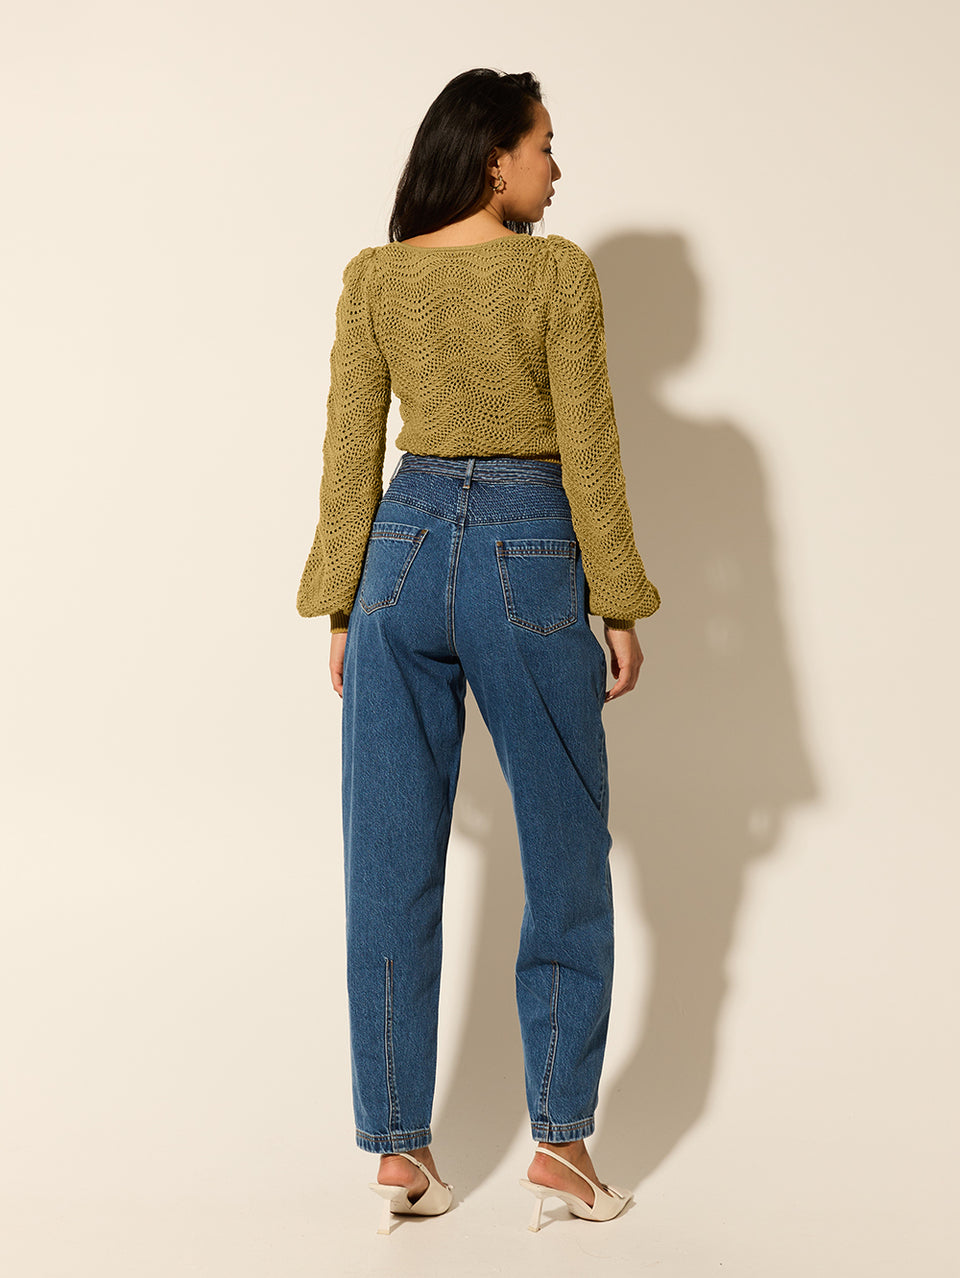 Mariana Knit Top Khaki KIVARI | Model wears khaki knit top back view